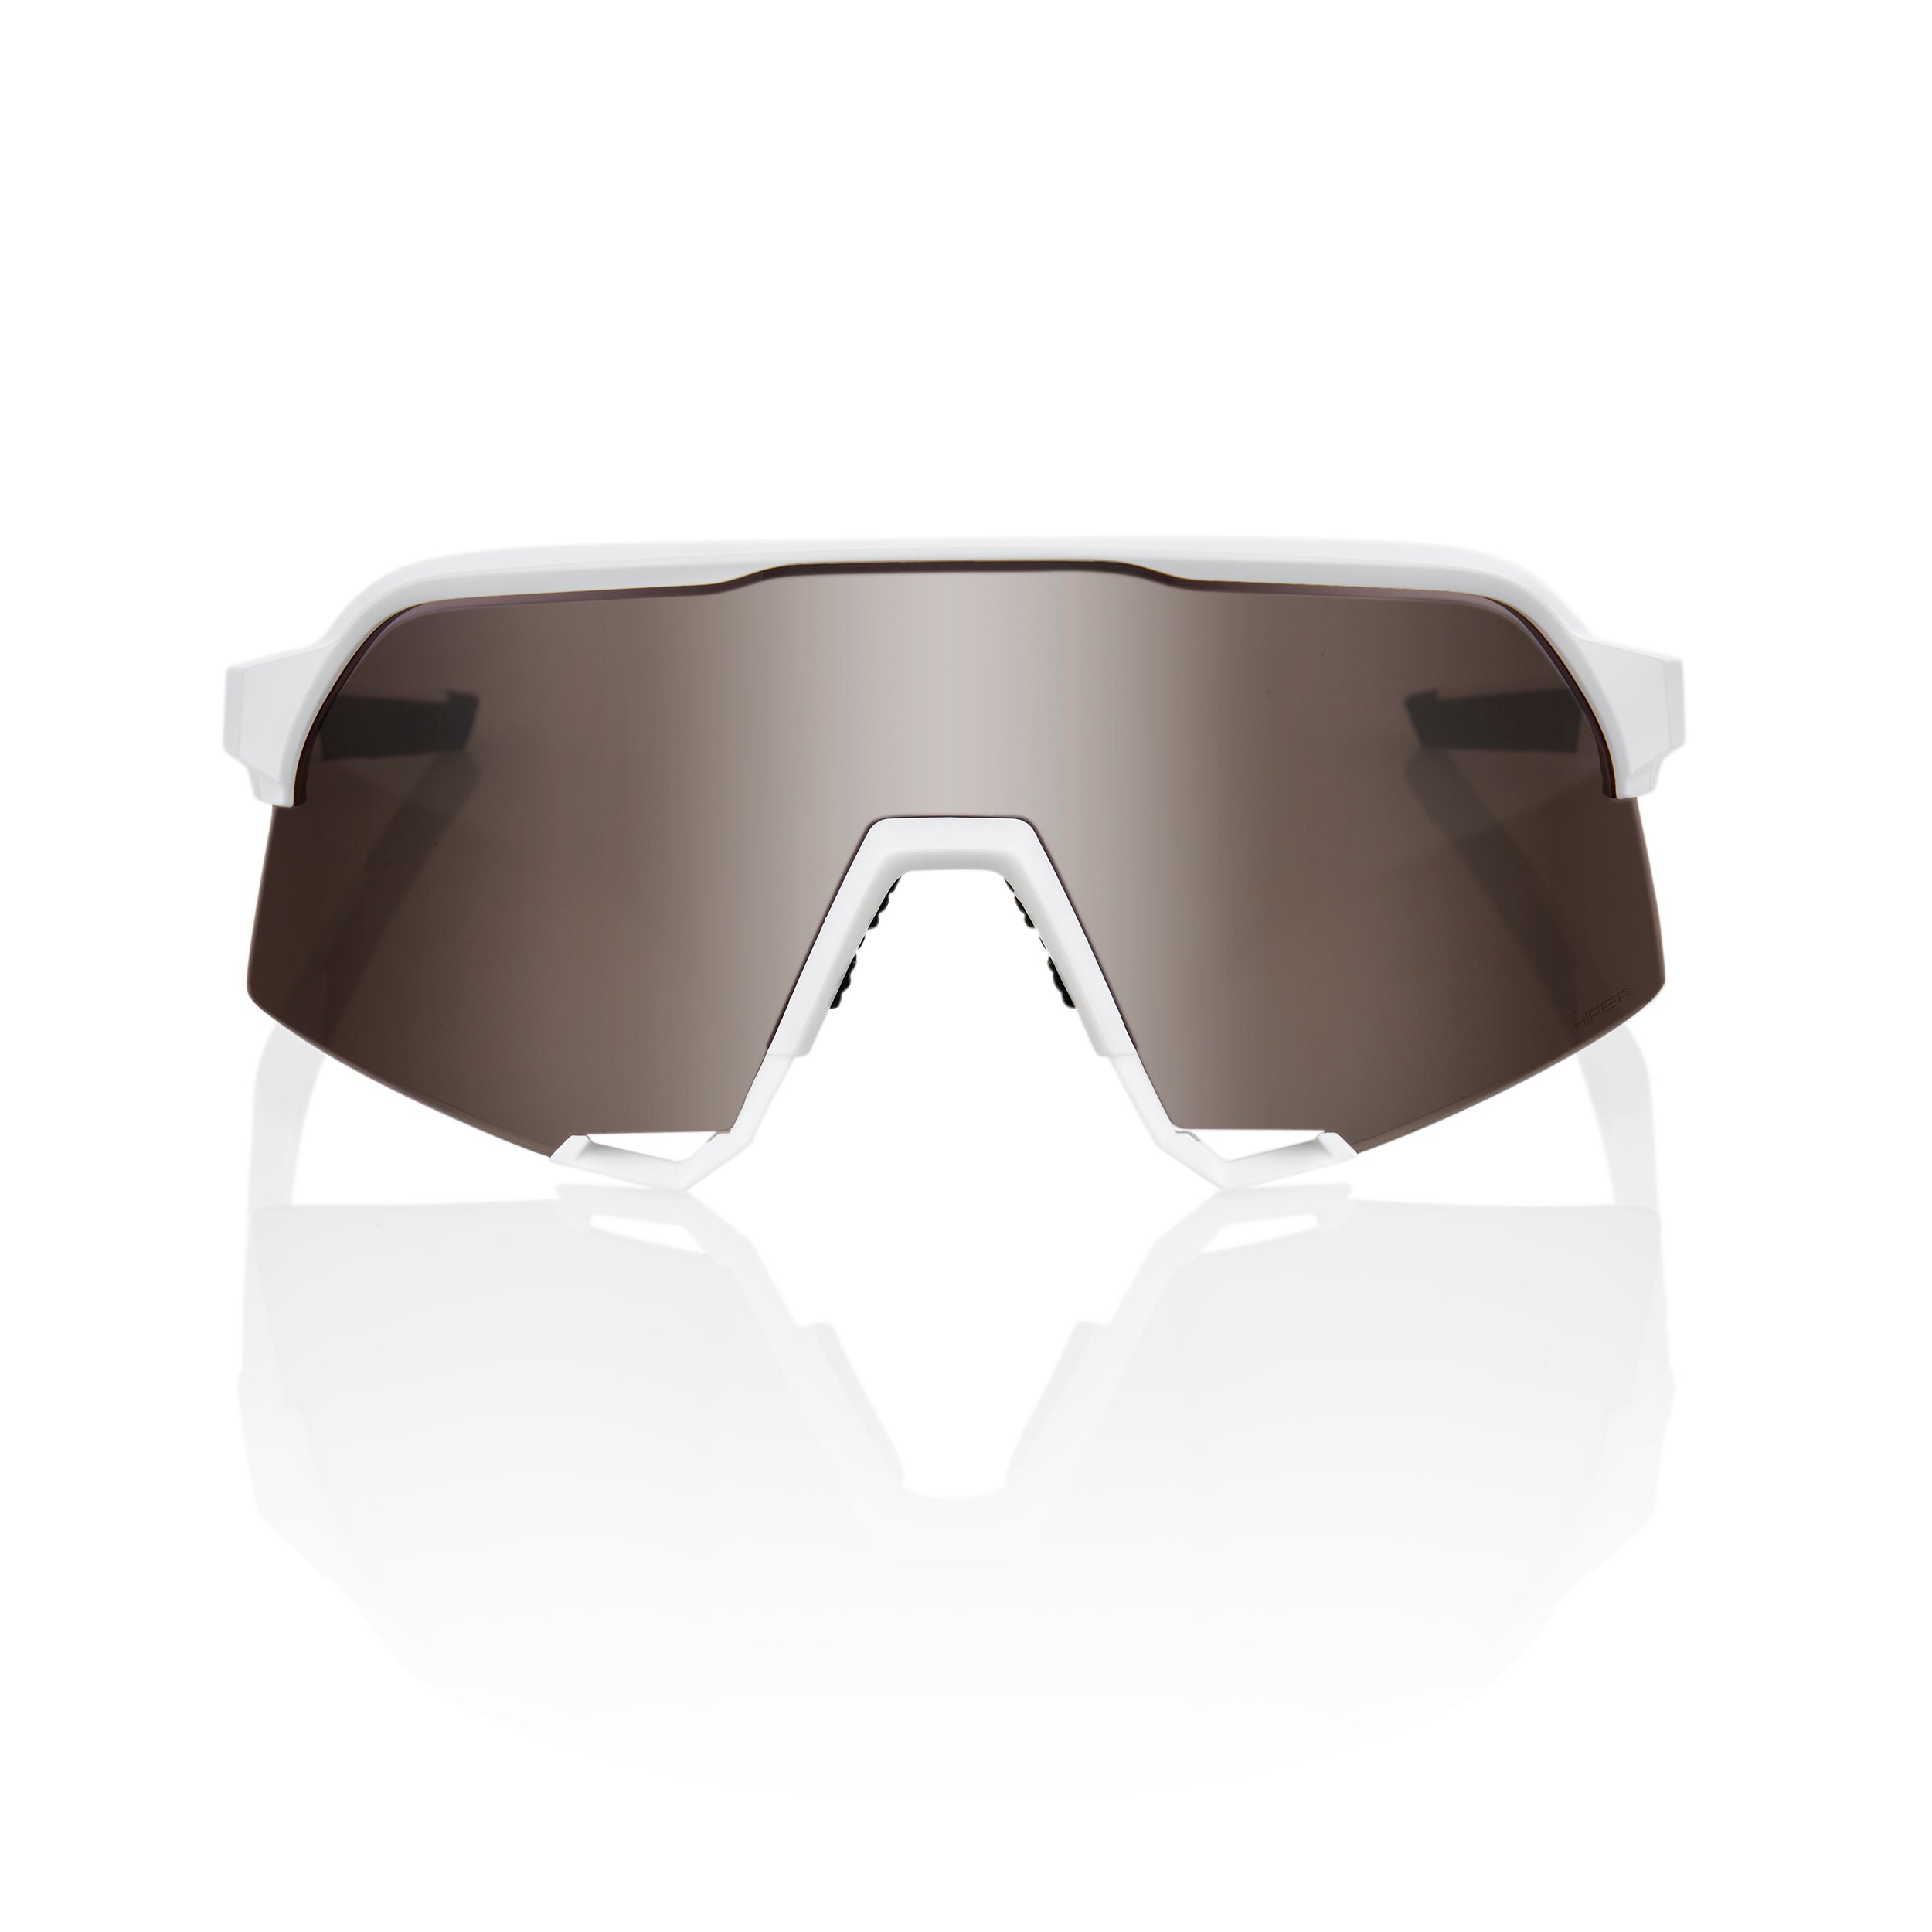 Baseball Sunglasses - Protective, Polarized Shades for Baseball – 100%